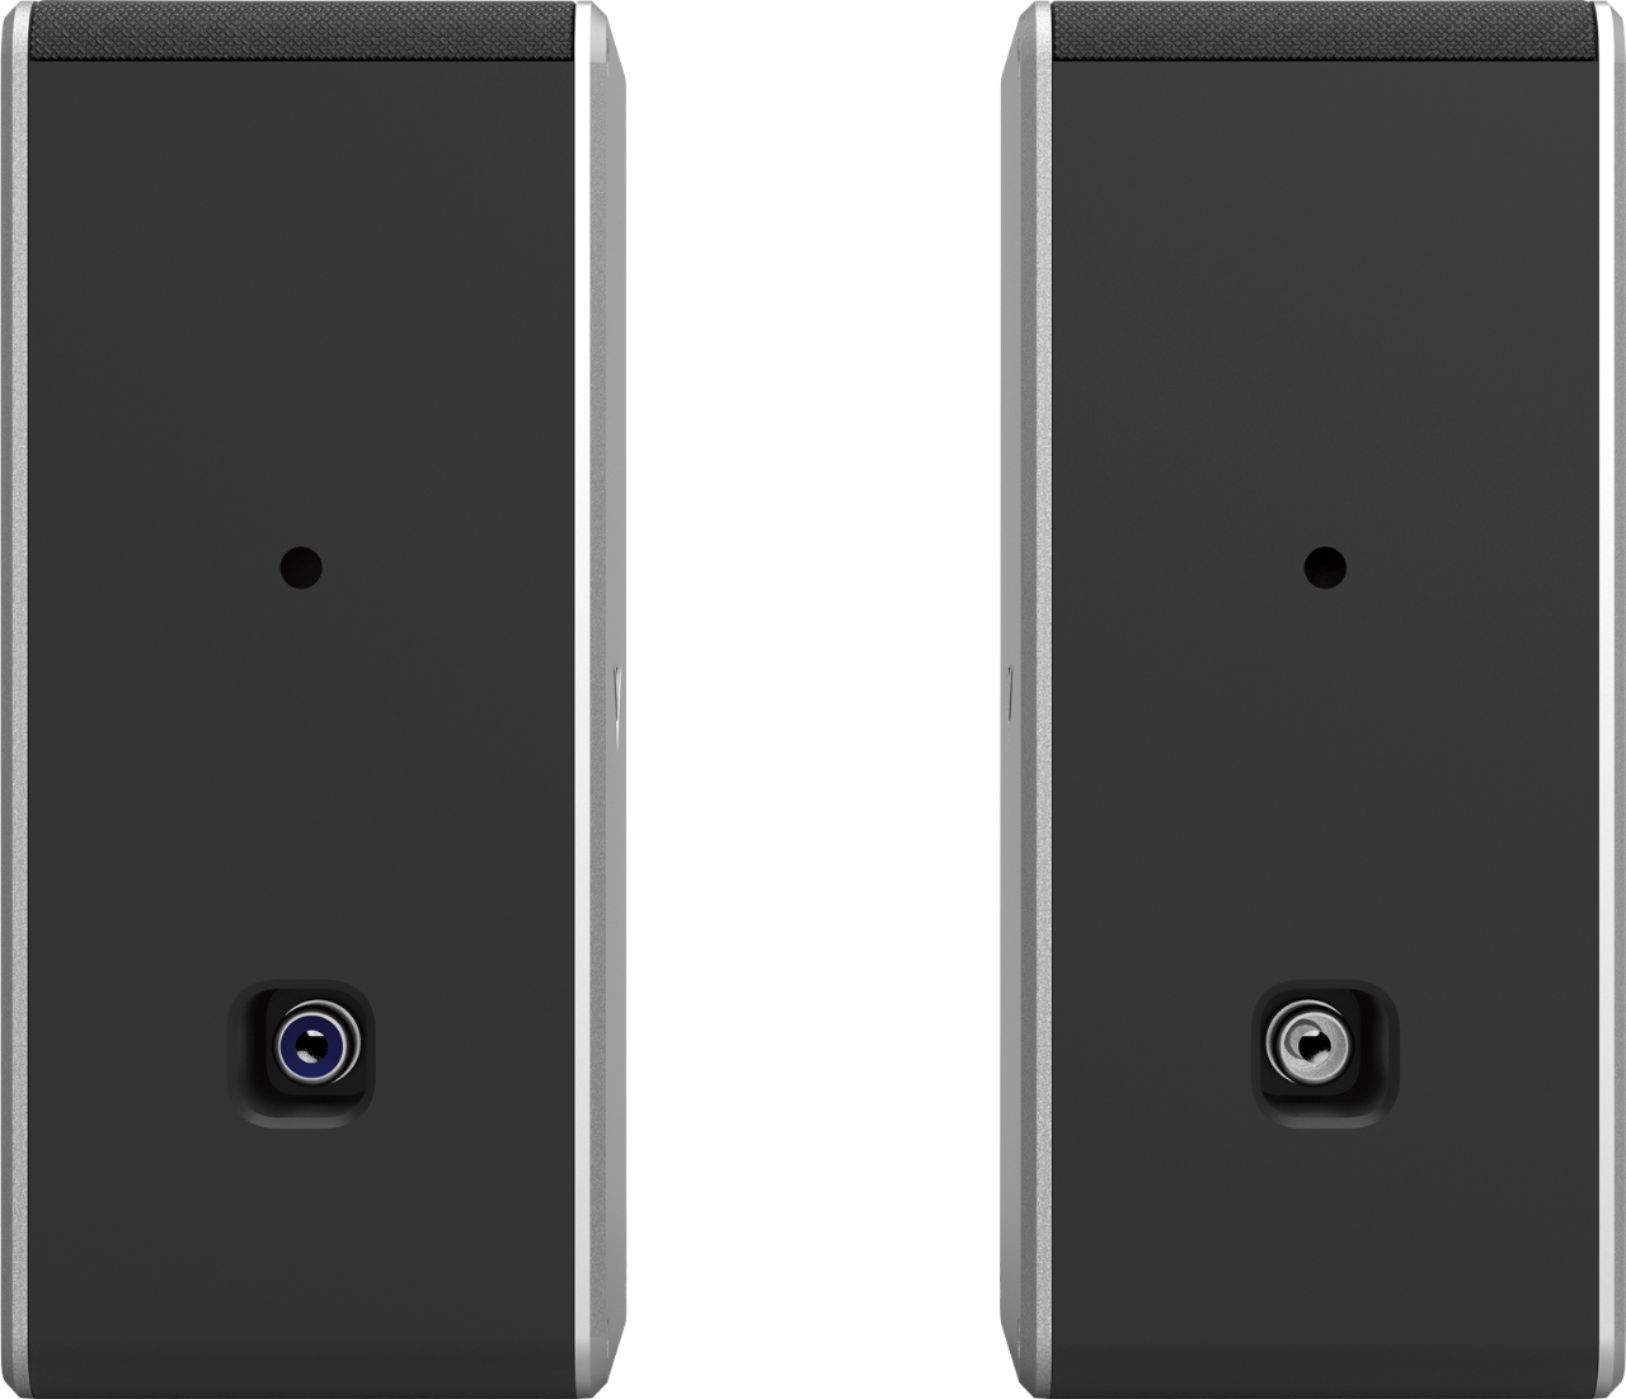 Black VIZIO SB3651-F6 36 5.1 Home Theater Sound Bar System